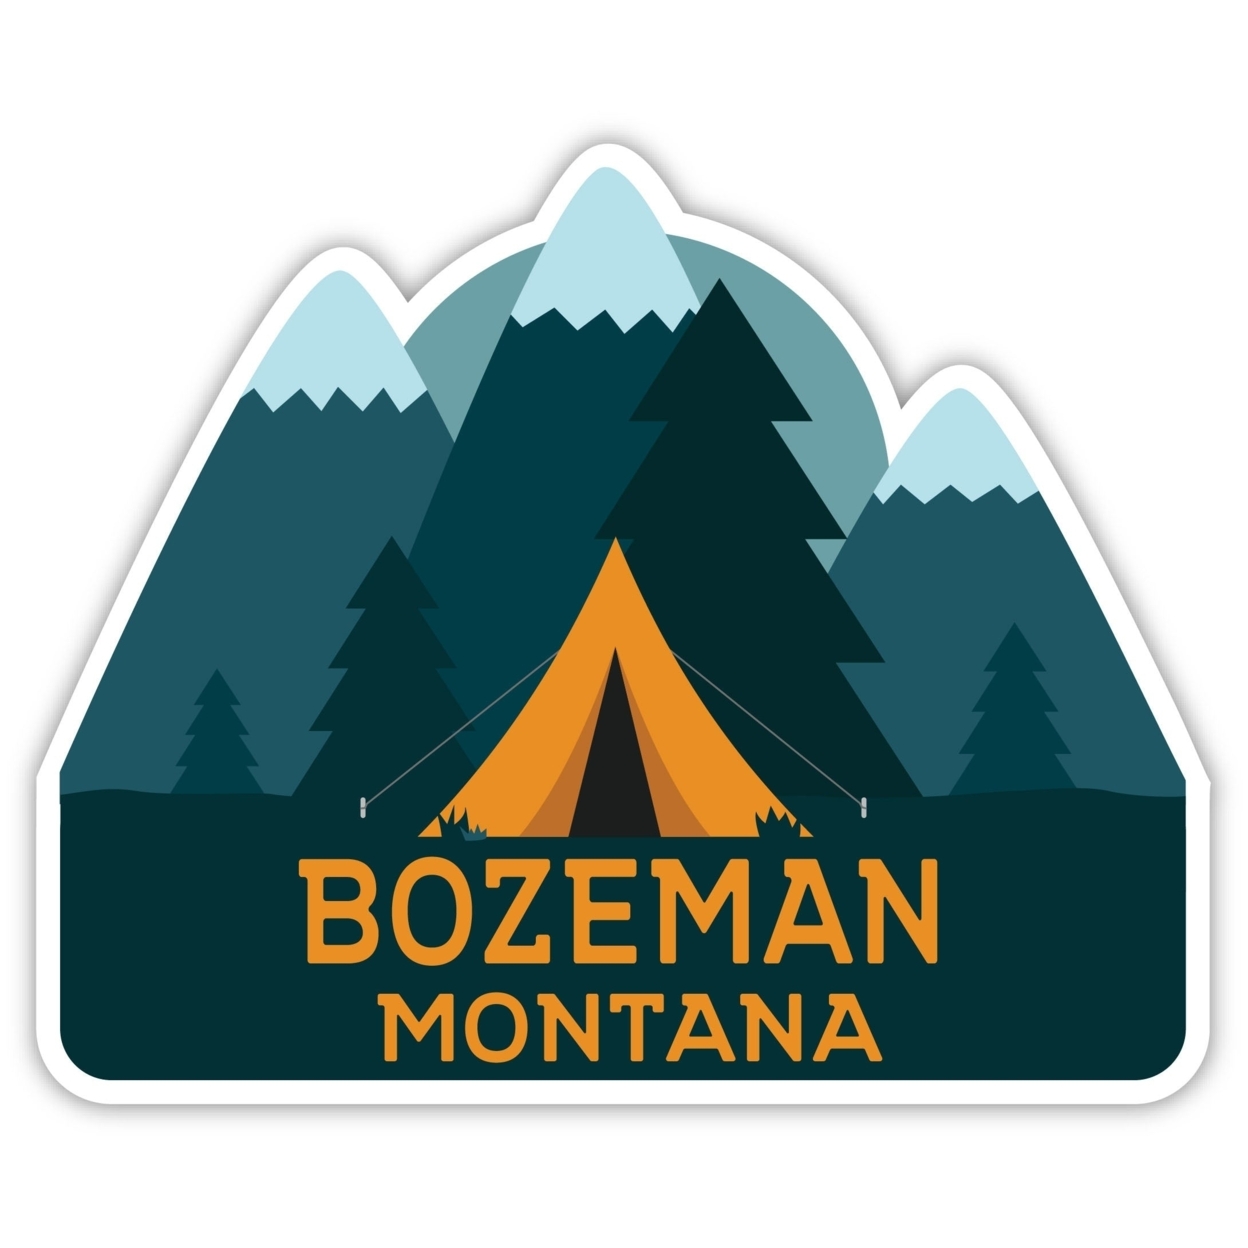 Bozeman Montana Souvenir Decorative Stickers (Choose Theme And Size) - 4-Pack, 4-Inch, Tent